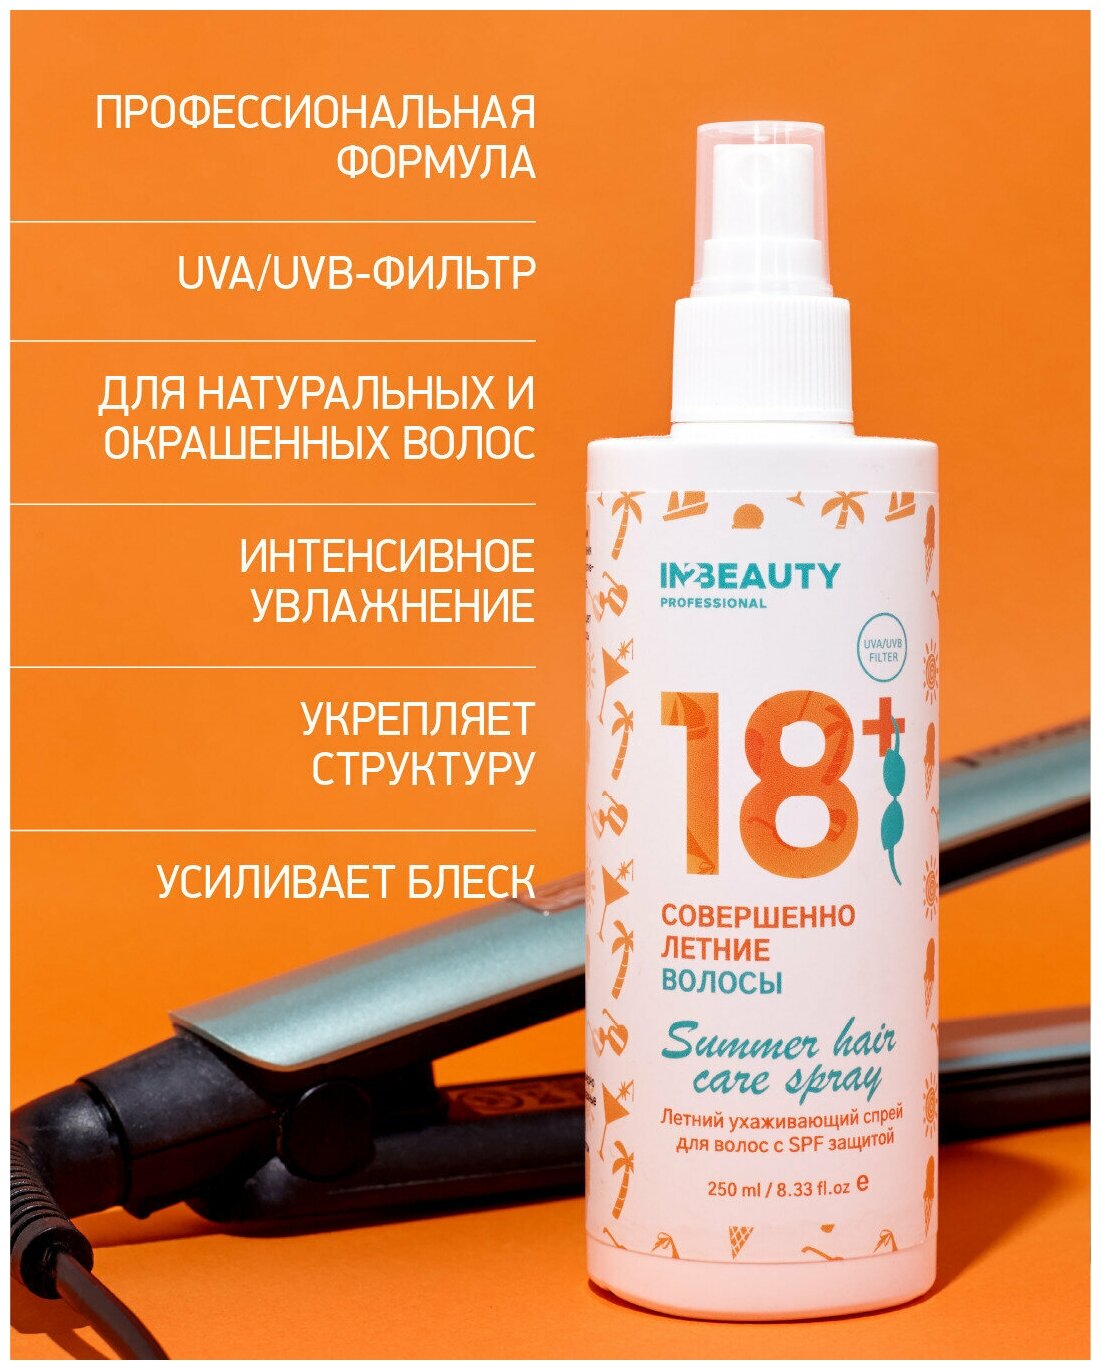 IN2BEAUTY Professional/ спрей для волос несмываемый летний уход с защитой от солнца и ультрафиолета 18+, SPF фильтр UVA и UVB термозащита, 250мл